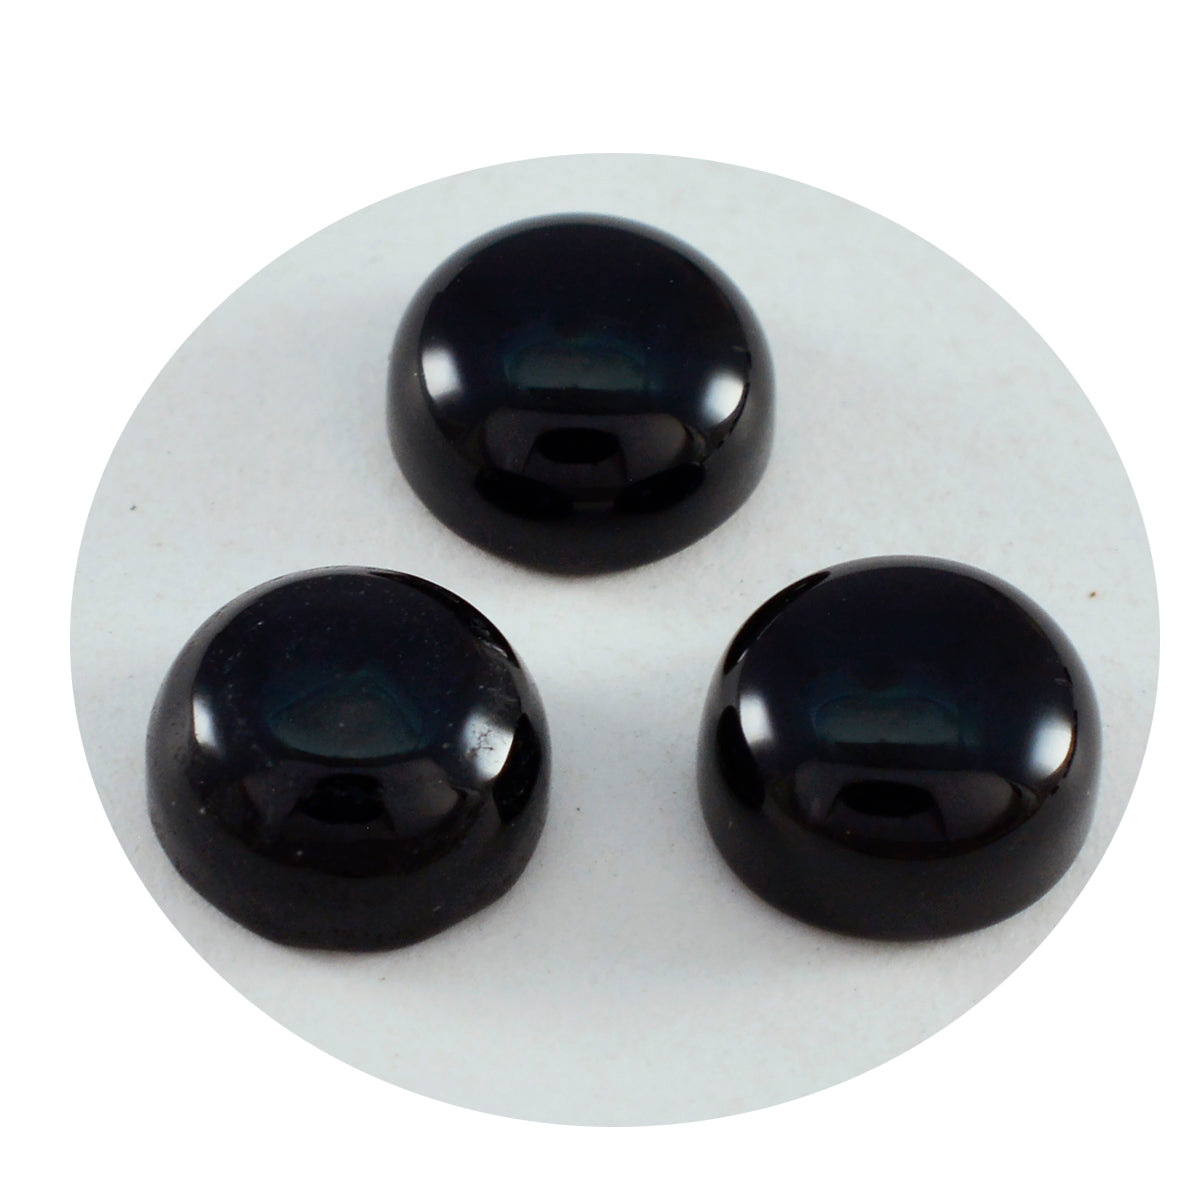 Riyogems 1PC Black Onyx Cabochon 9X9 mm Round Shape beautiful Quality Stone